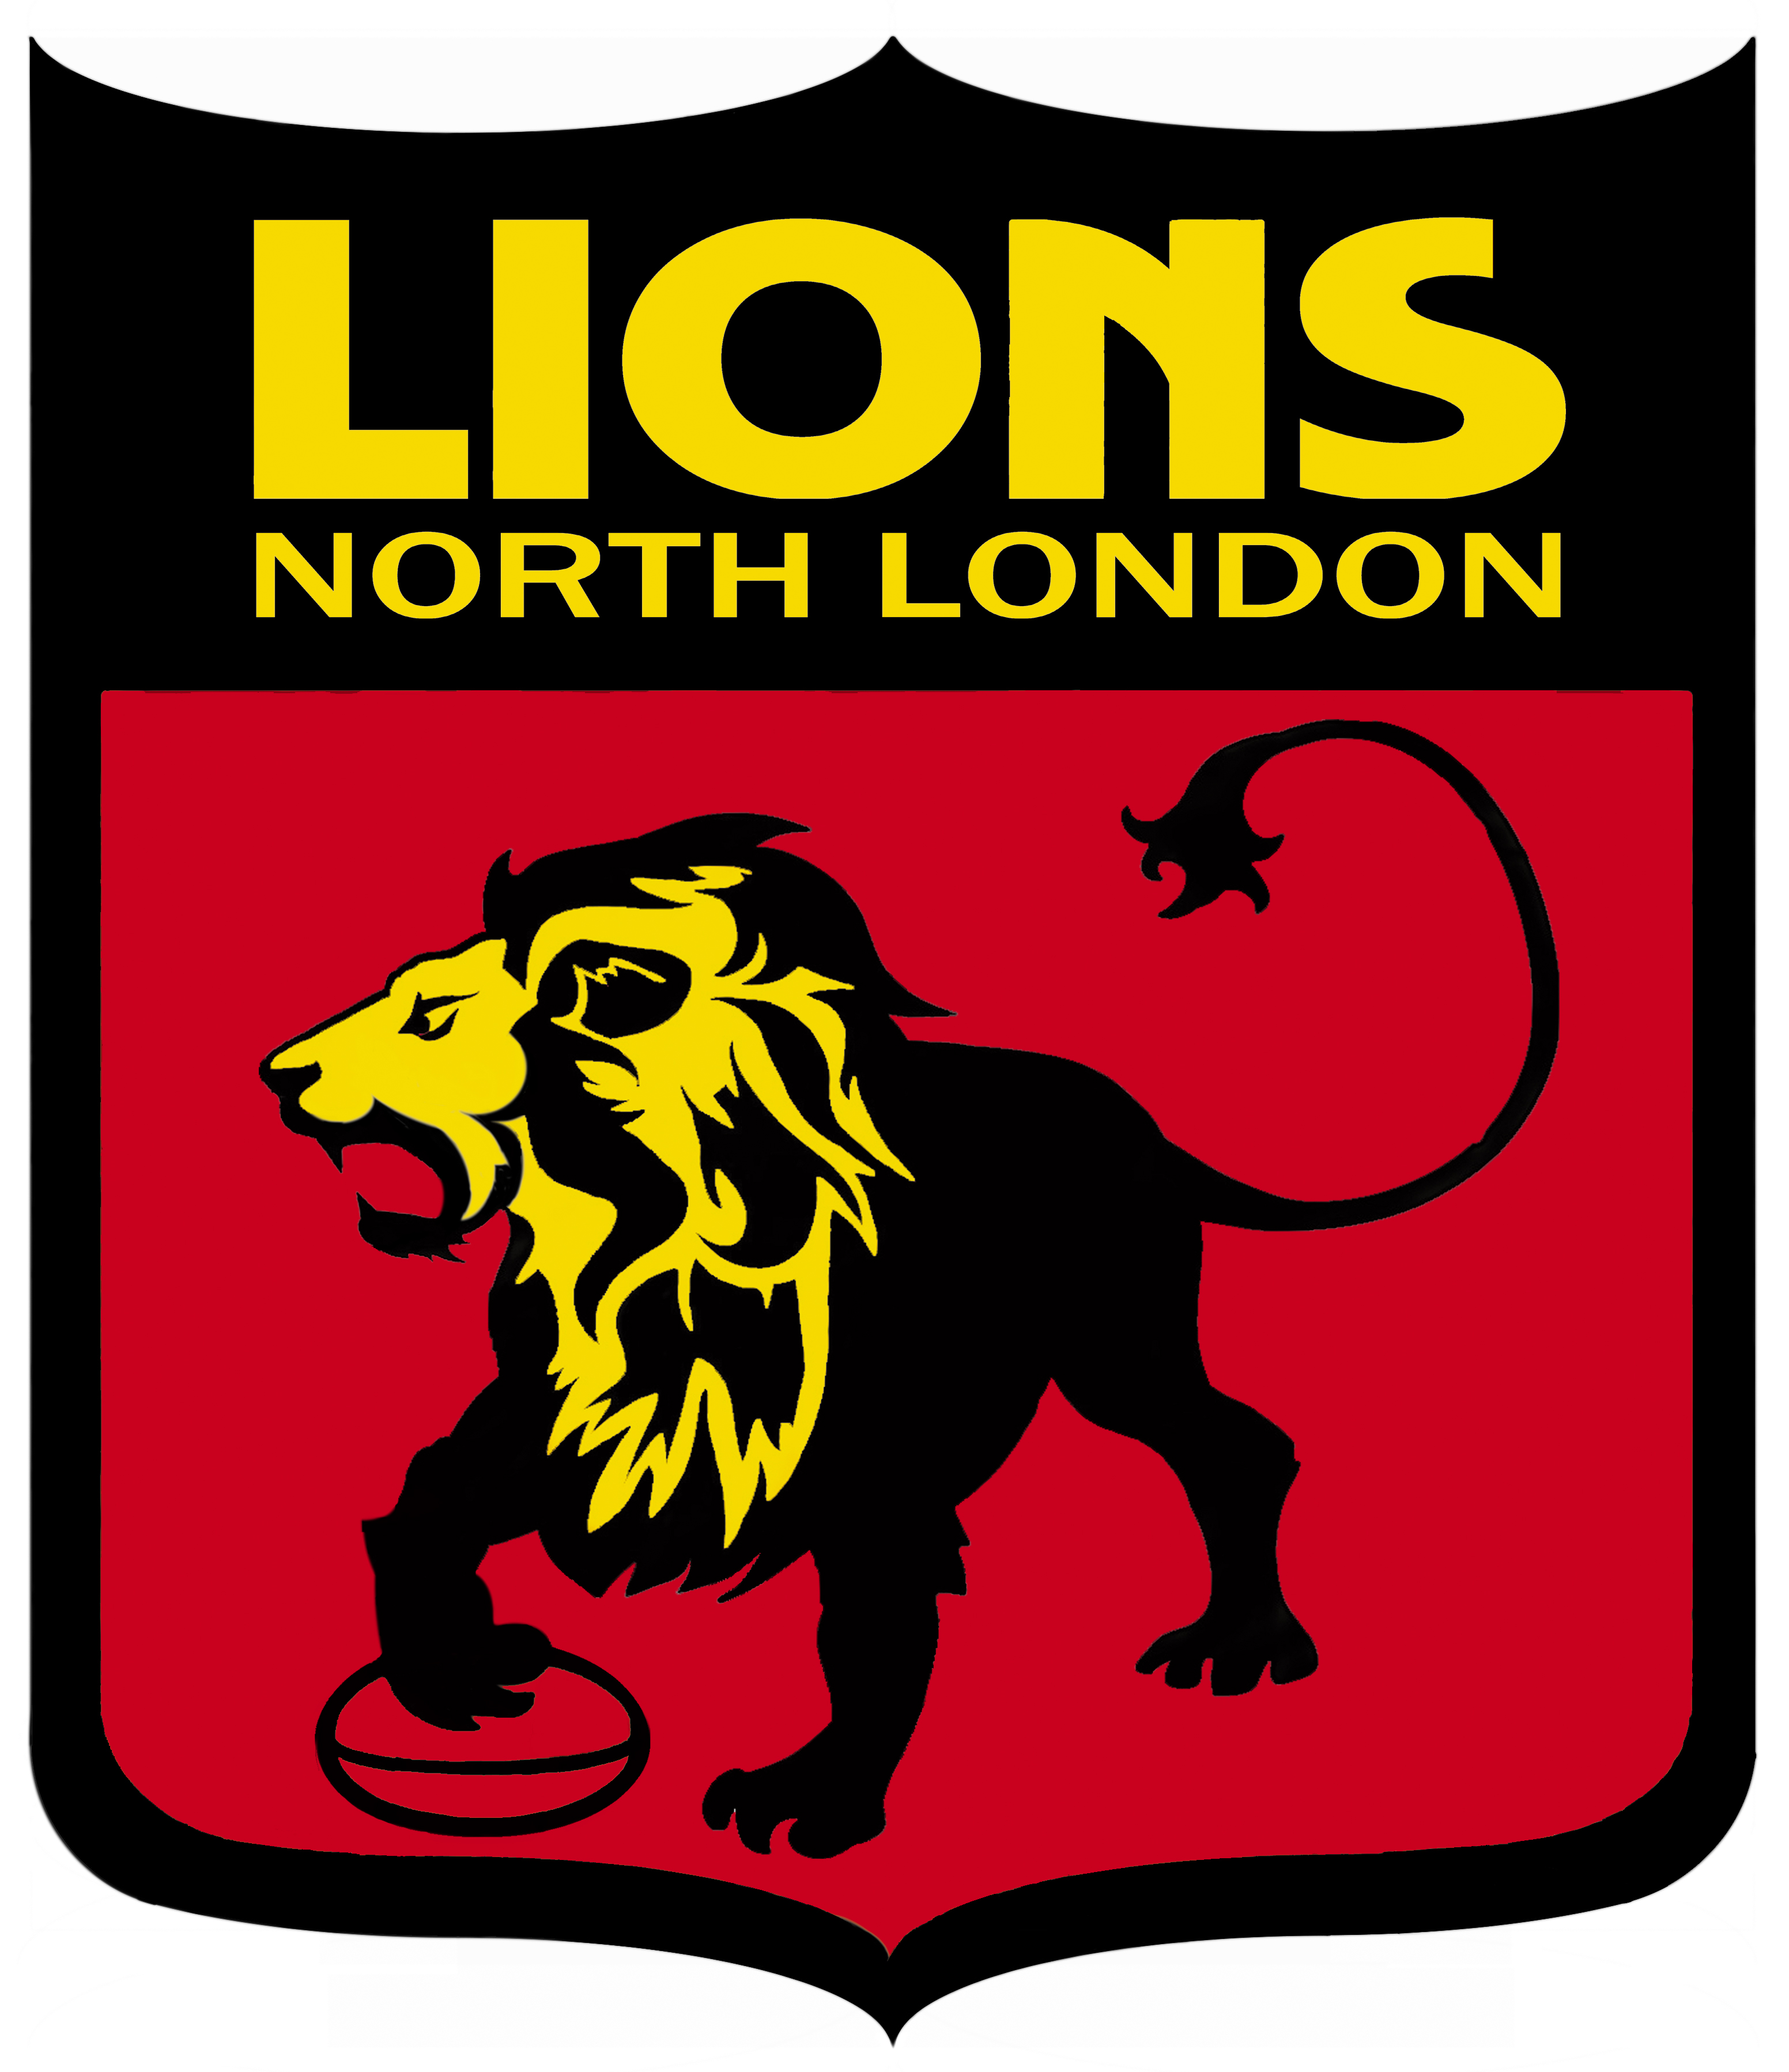 Лев лондон. Lion London. North London. Лондон Лайонс логотип. Норт Лондон футбольный клуб.